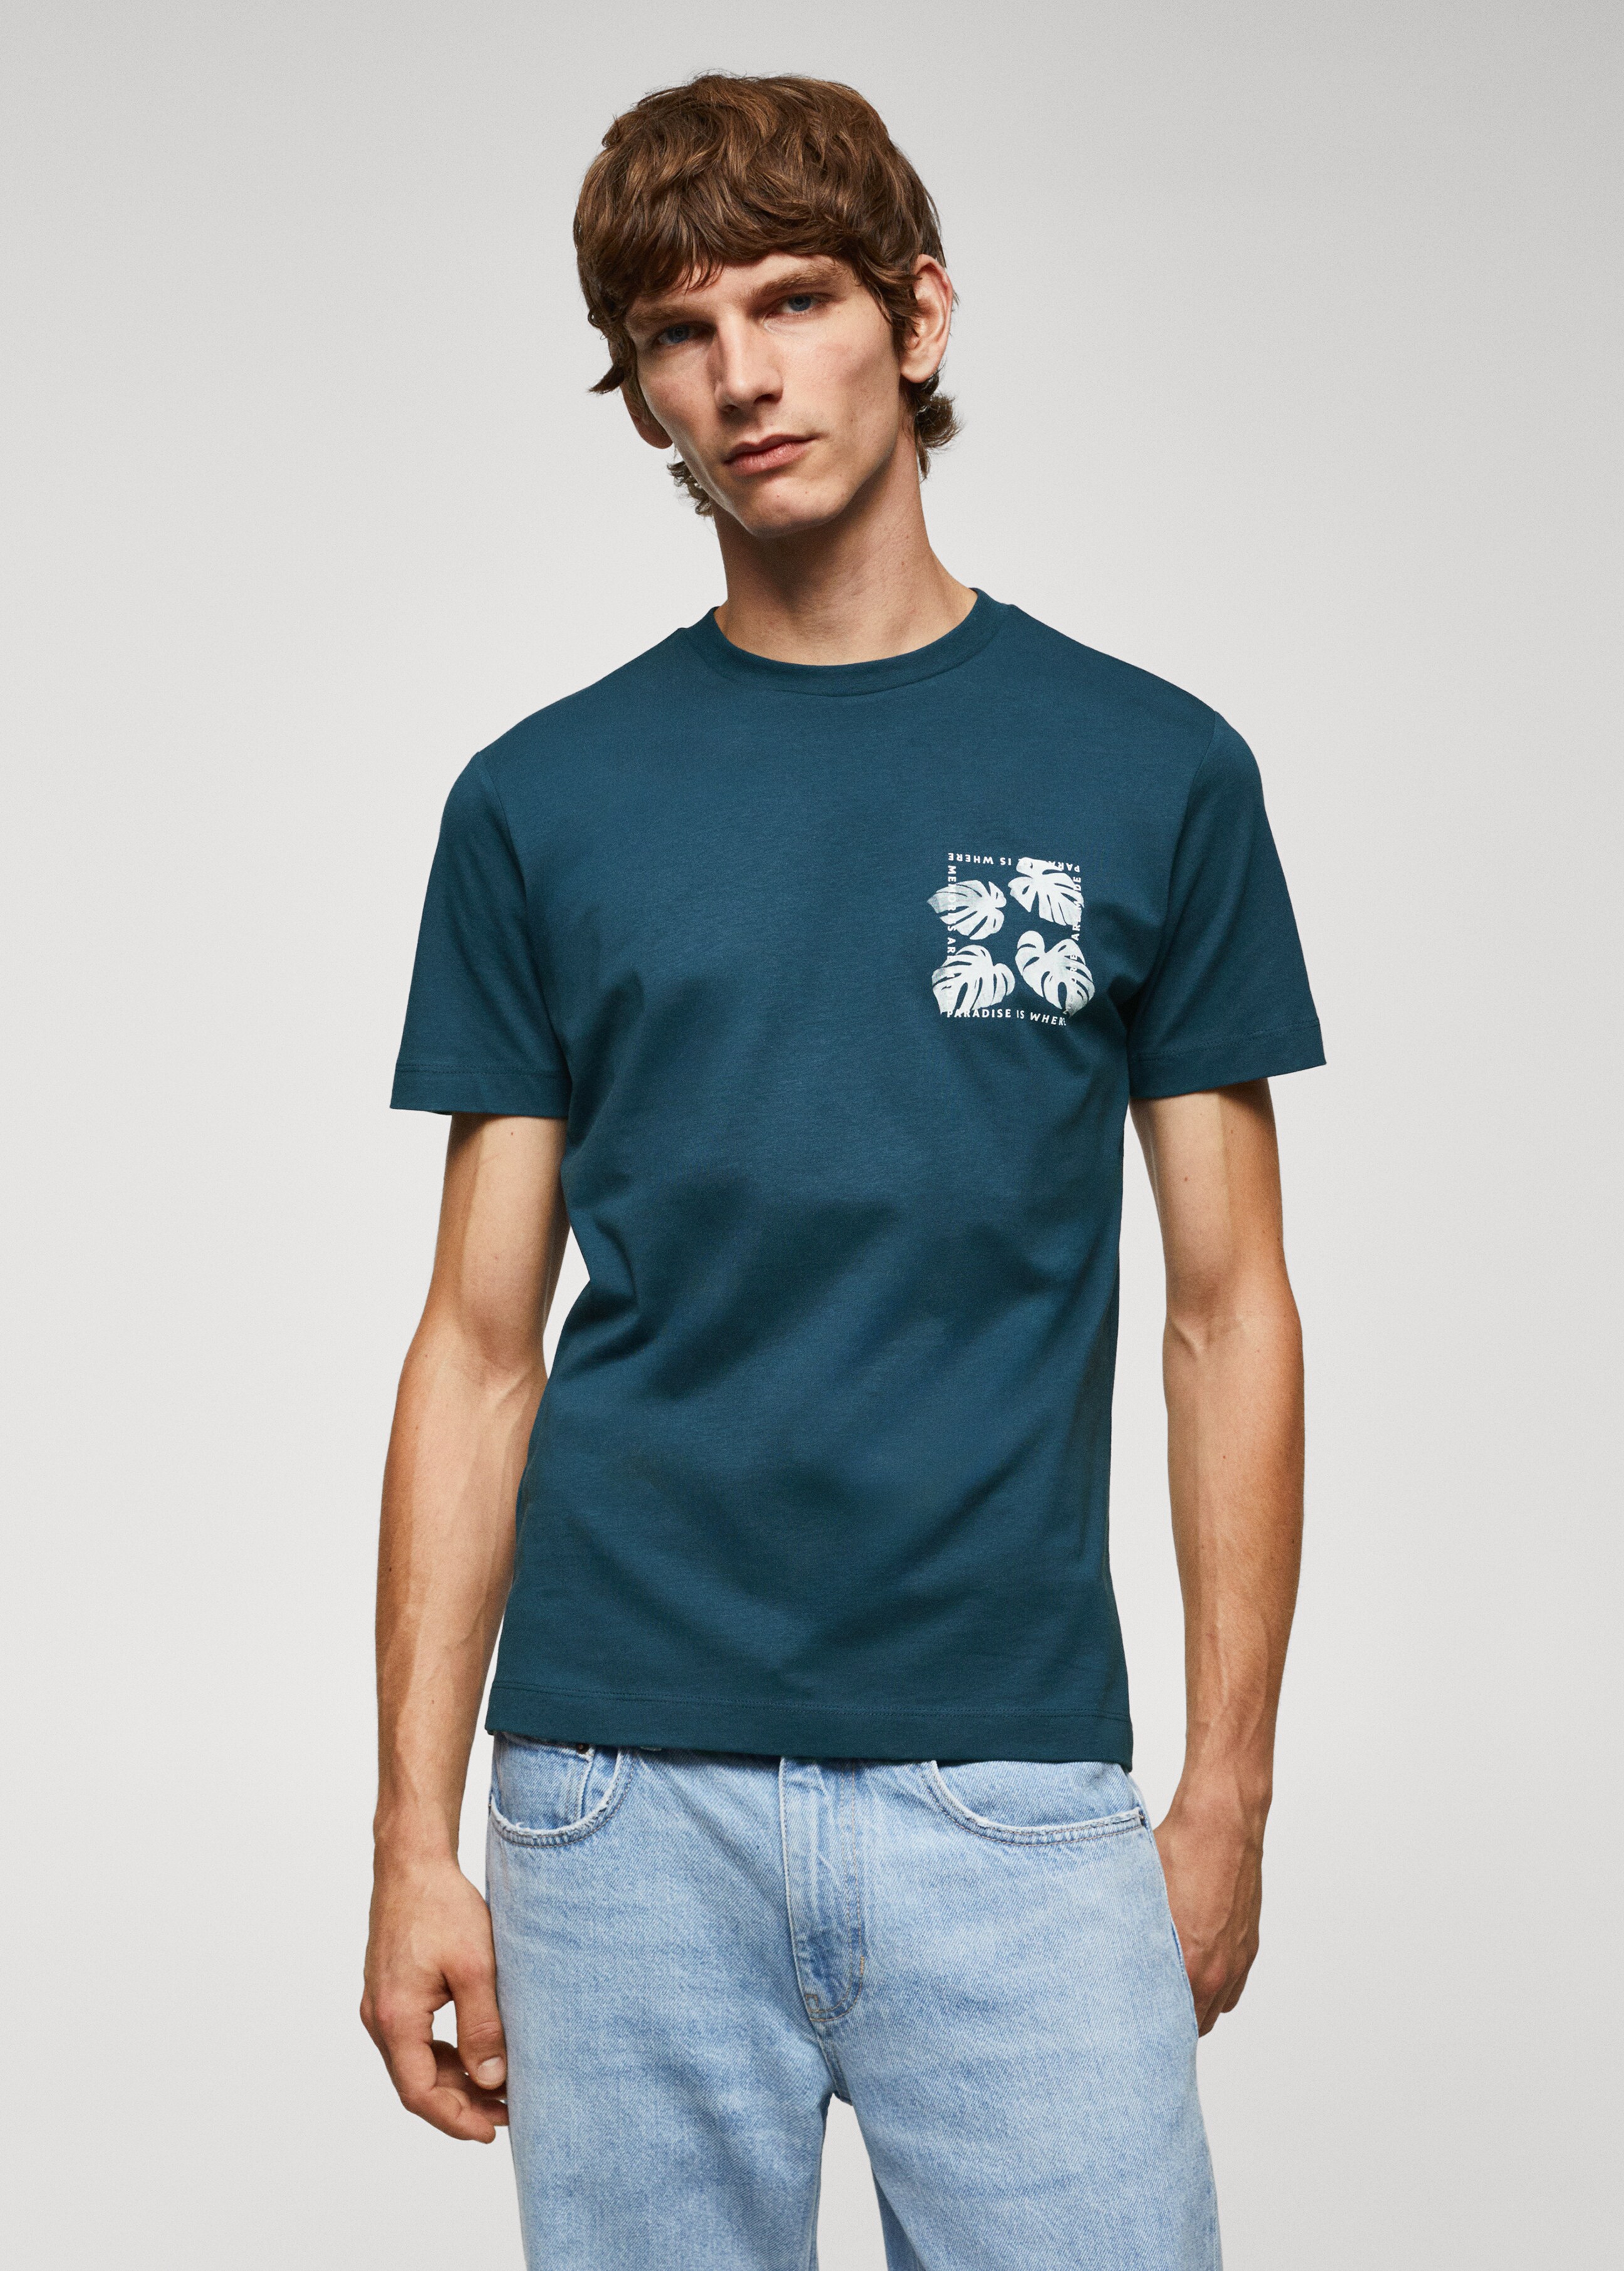 100% cotton printed t-shirt - Medium plane